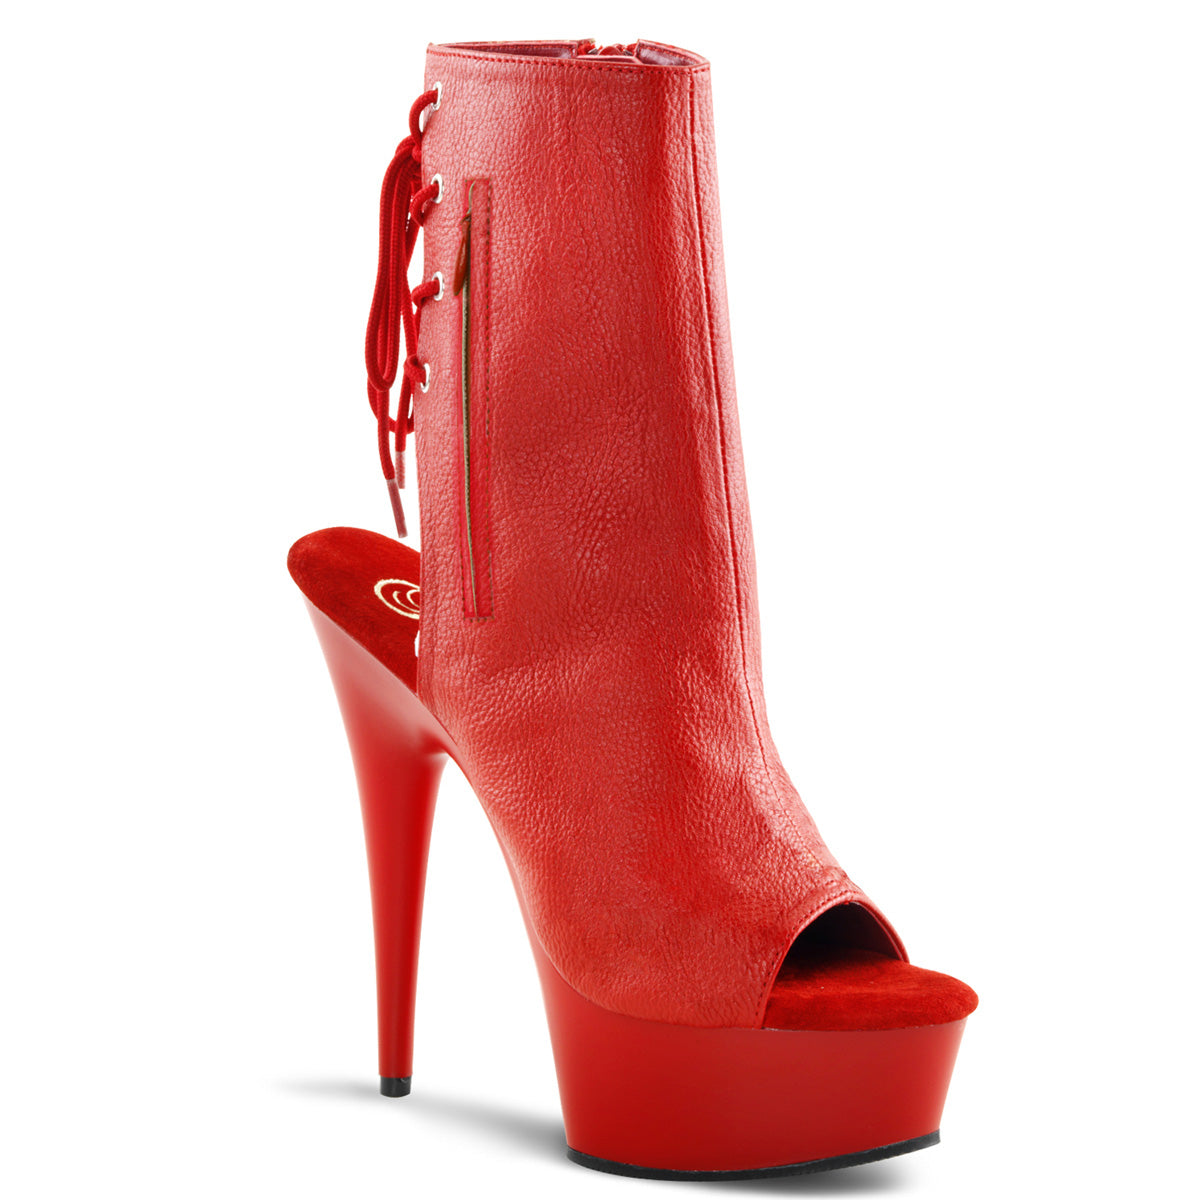 DELIGHT-1018 Pleaser 6 Inch Heel Red Ankle Boots Stripper Platforms High Heels